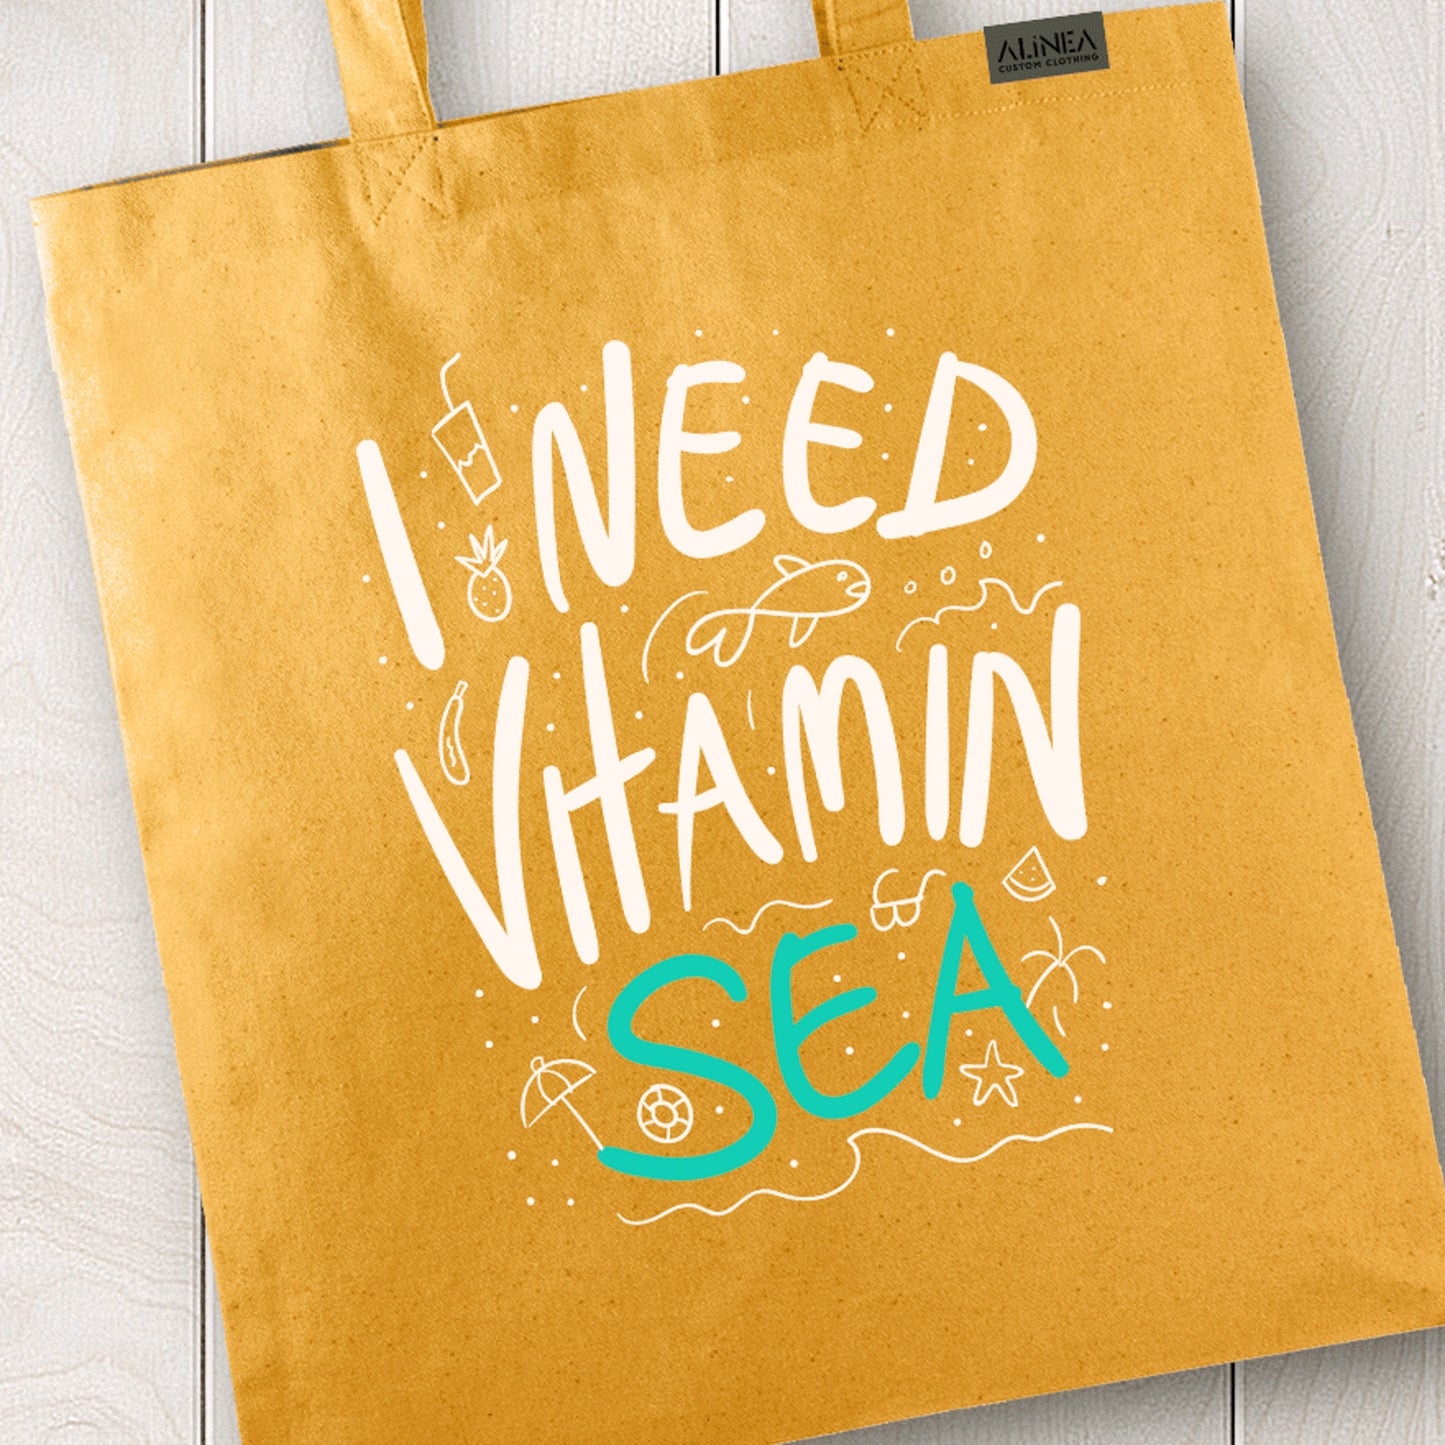 I Need Vitamin Sea Tote Bag